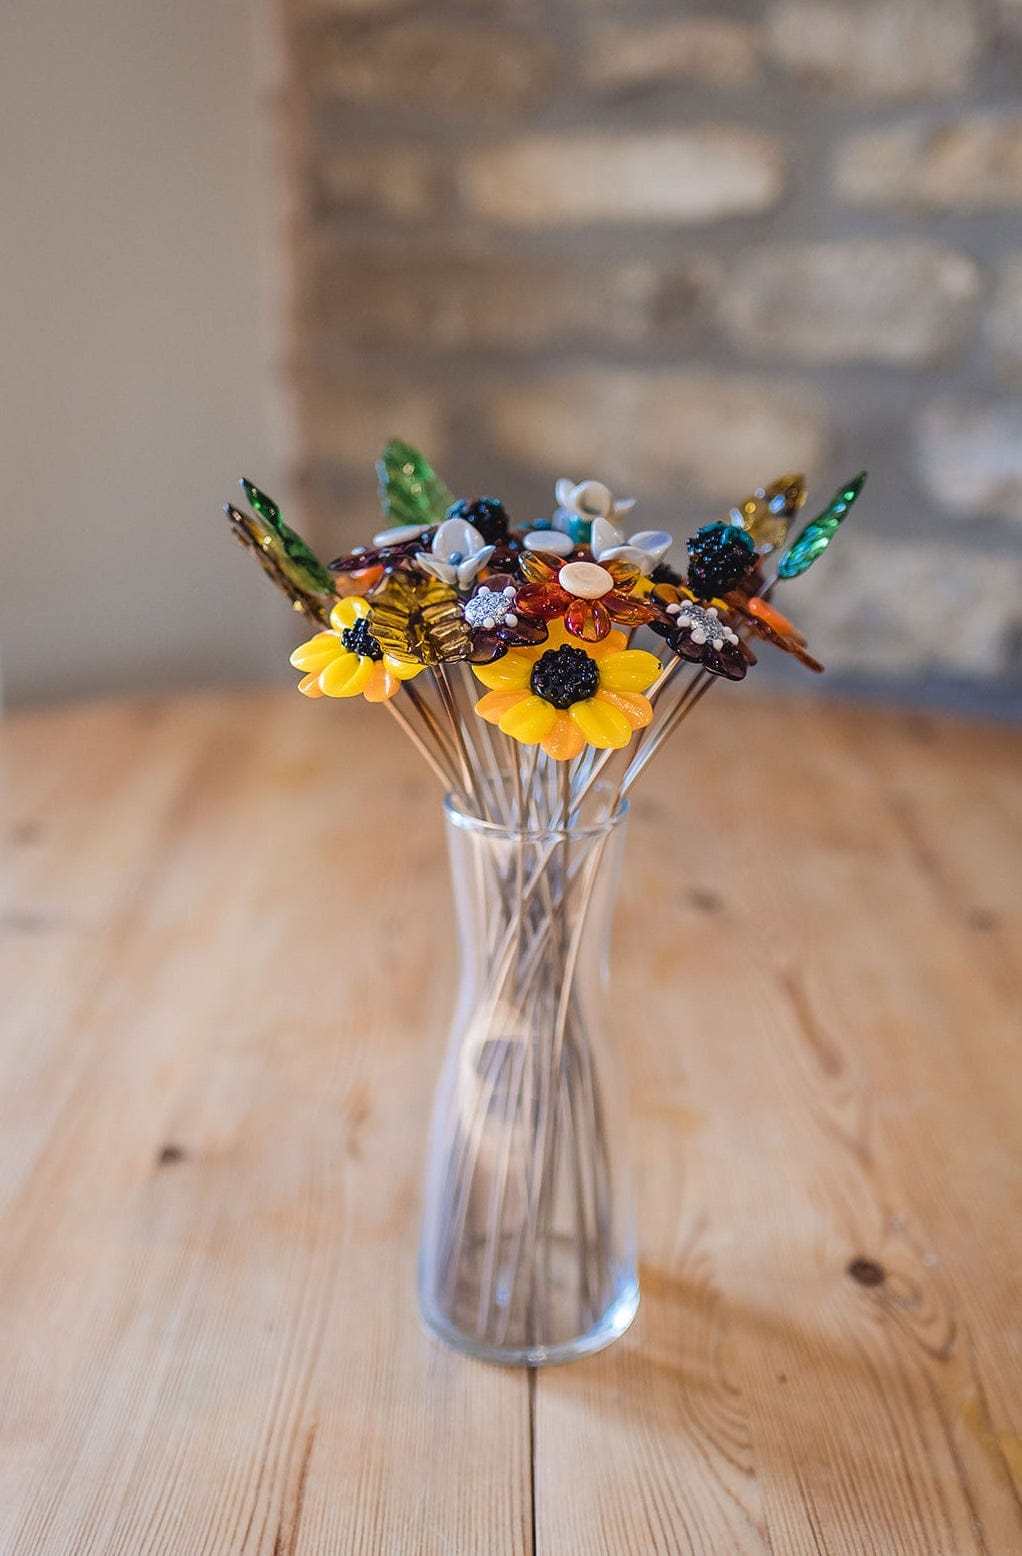 The Glass Florist  Handmade Glass Flowers – theglassflorist